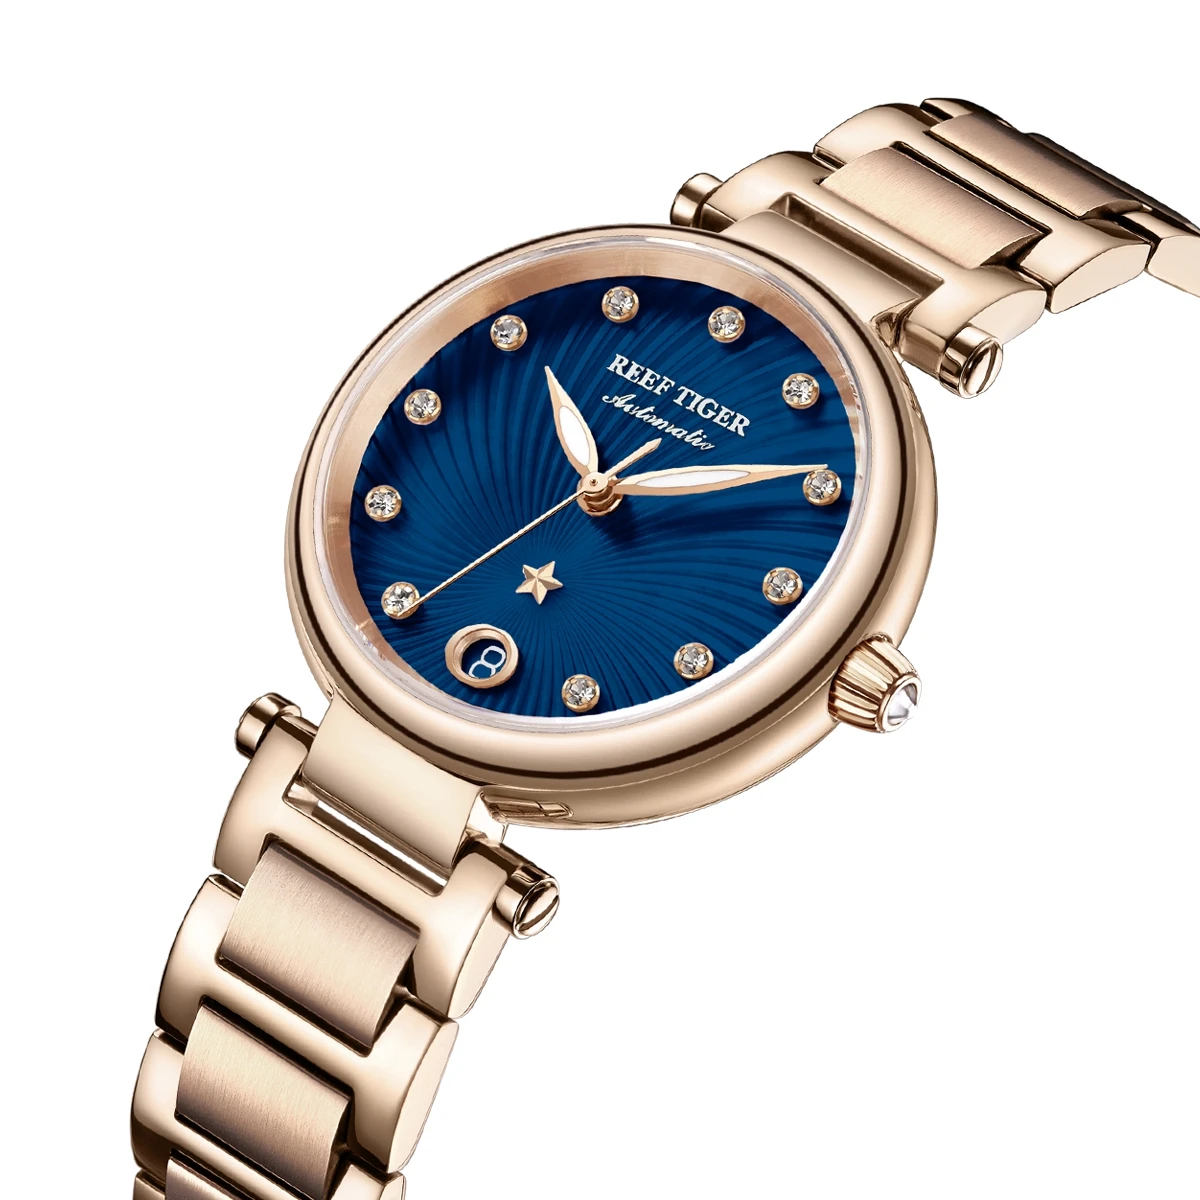 Reef Tiger/RT New Design Luxury Rose Gold Watch Blue Dial Automatic Watches Women Diamond Bracelet Watch reloj mujer RGA1590 enlarge